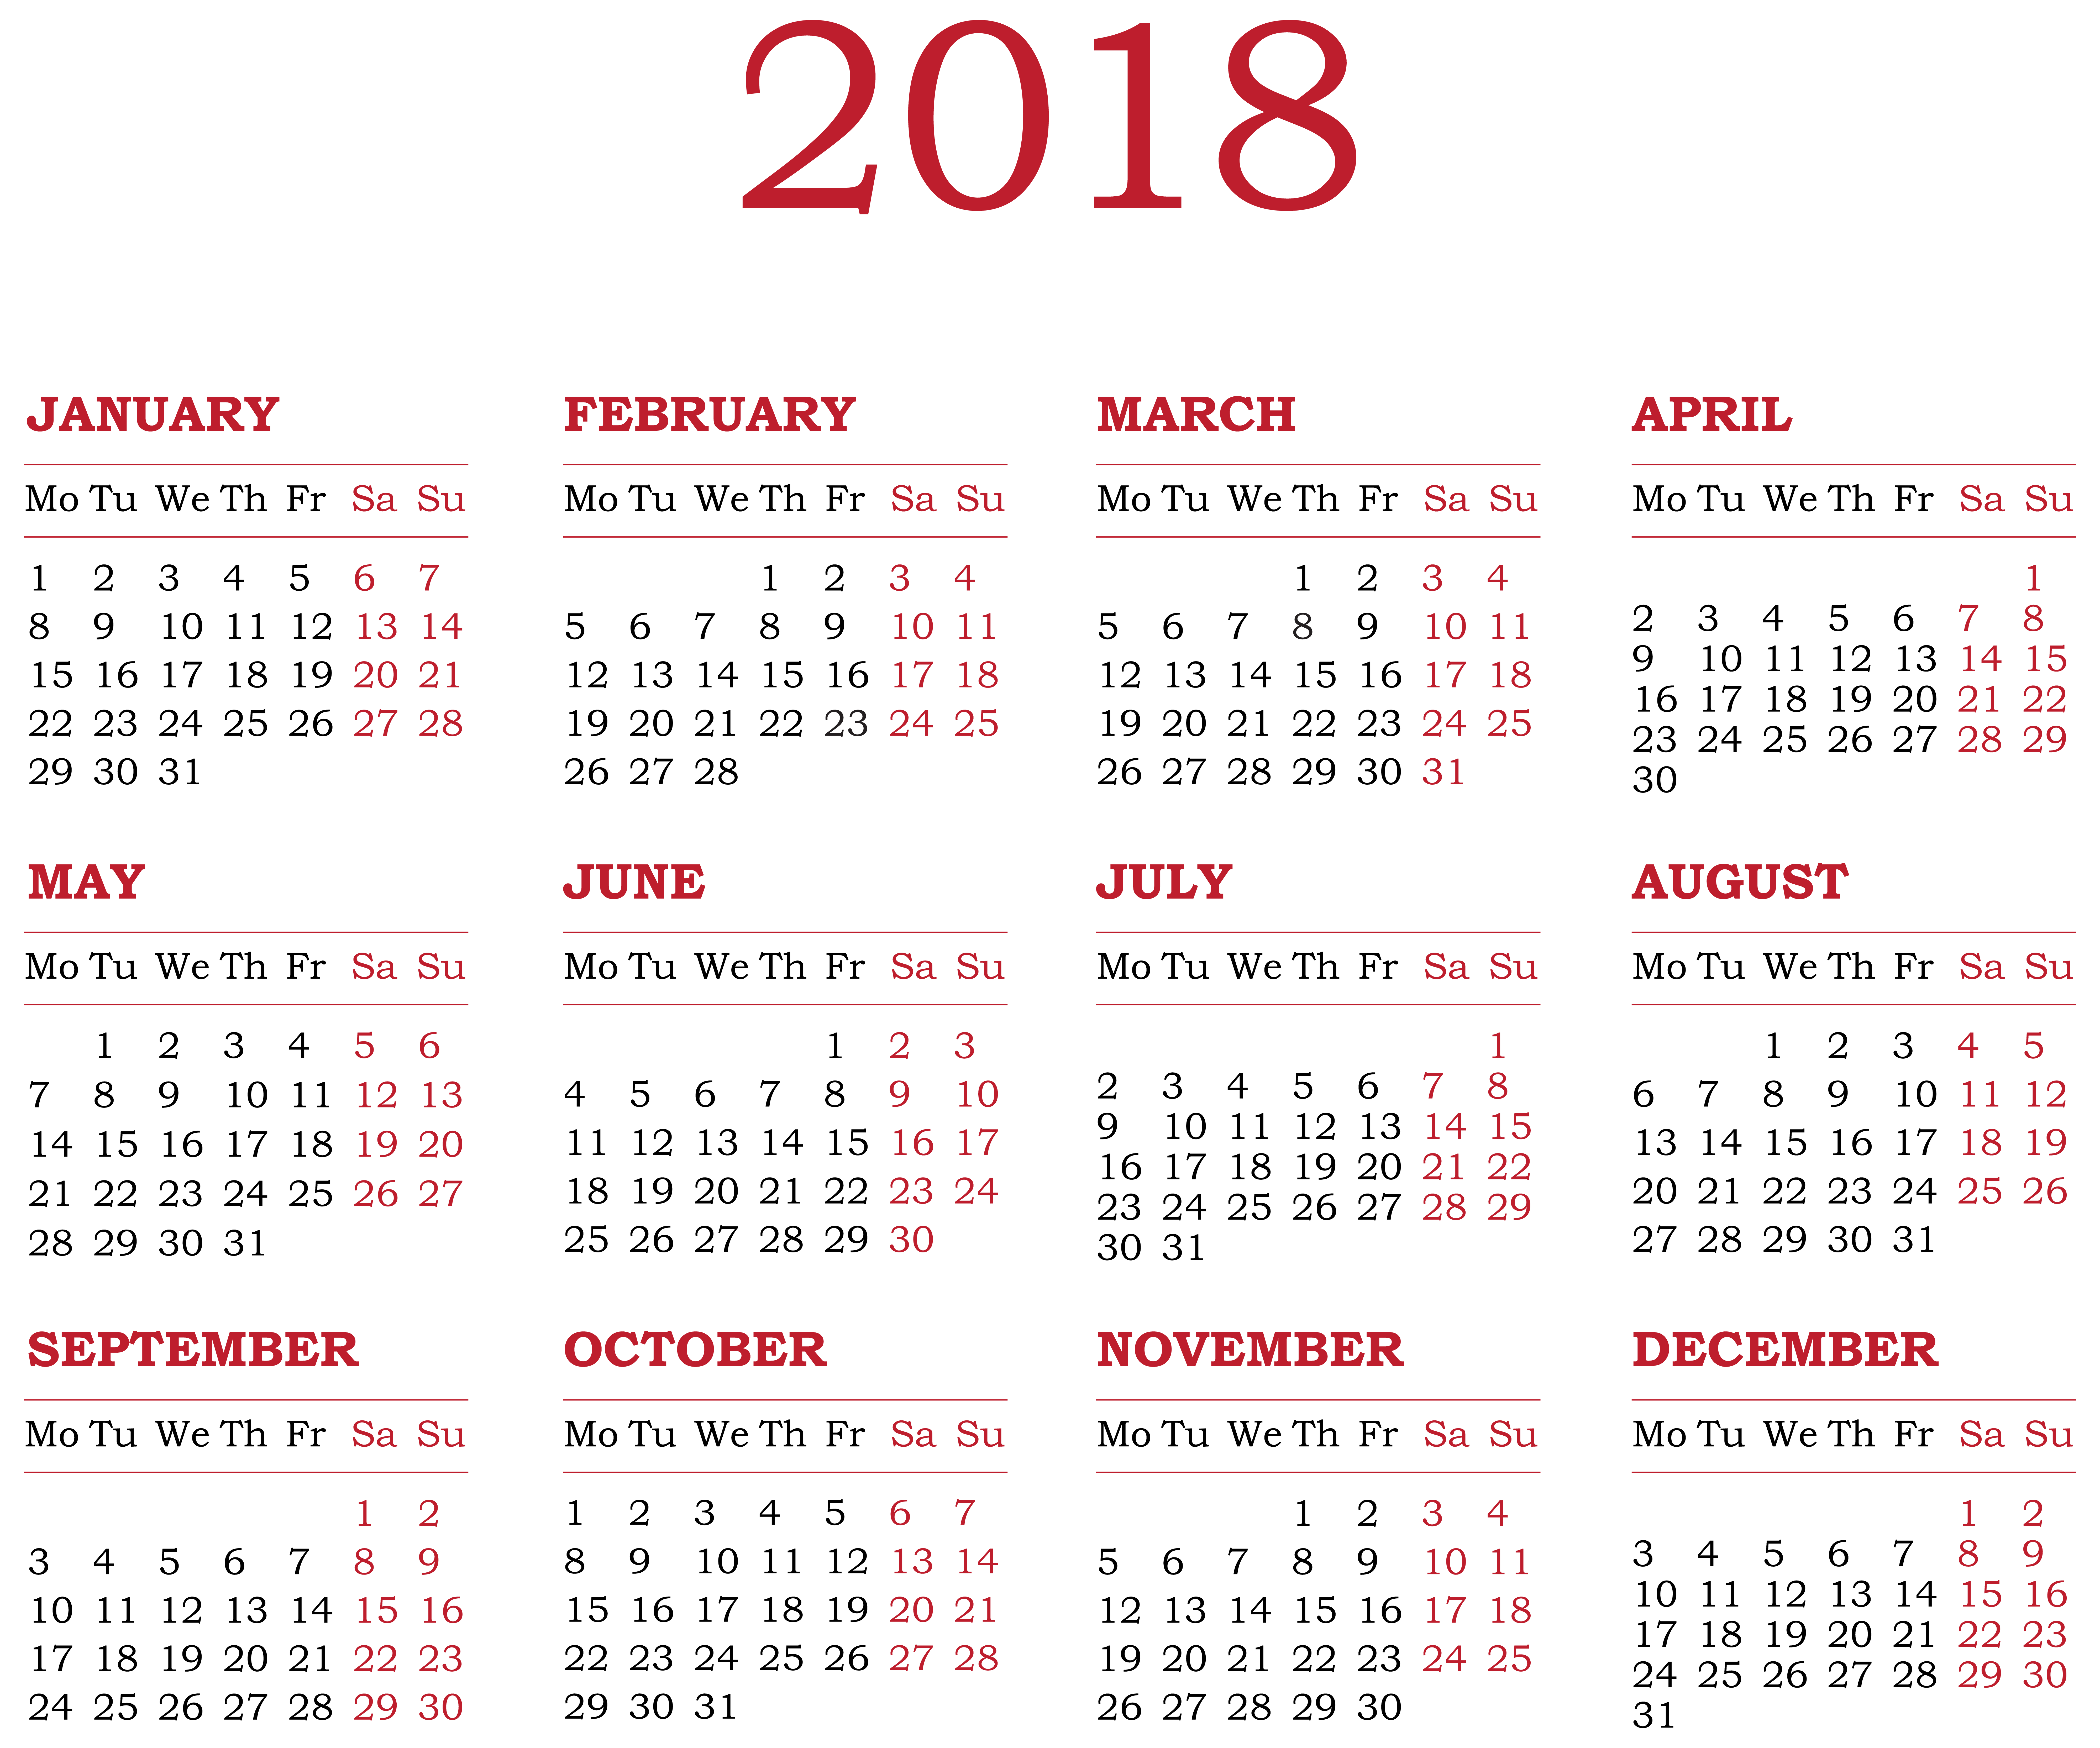 clipart calendar new year